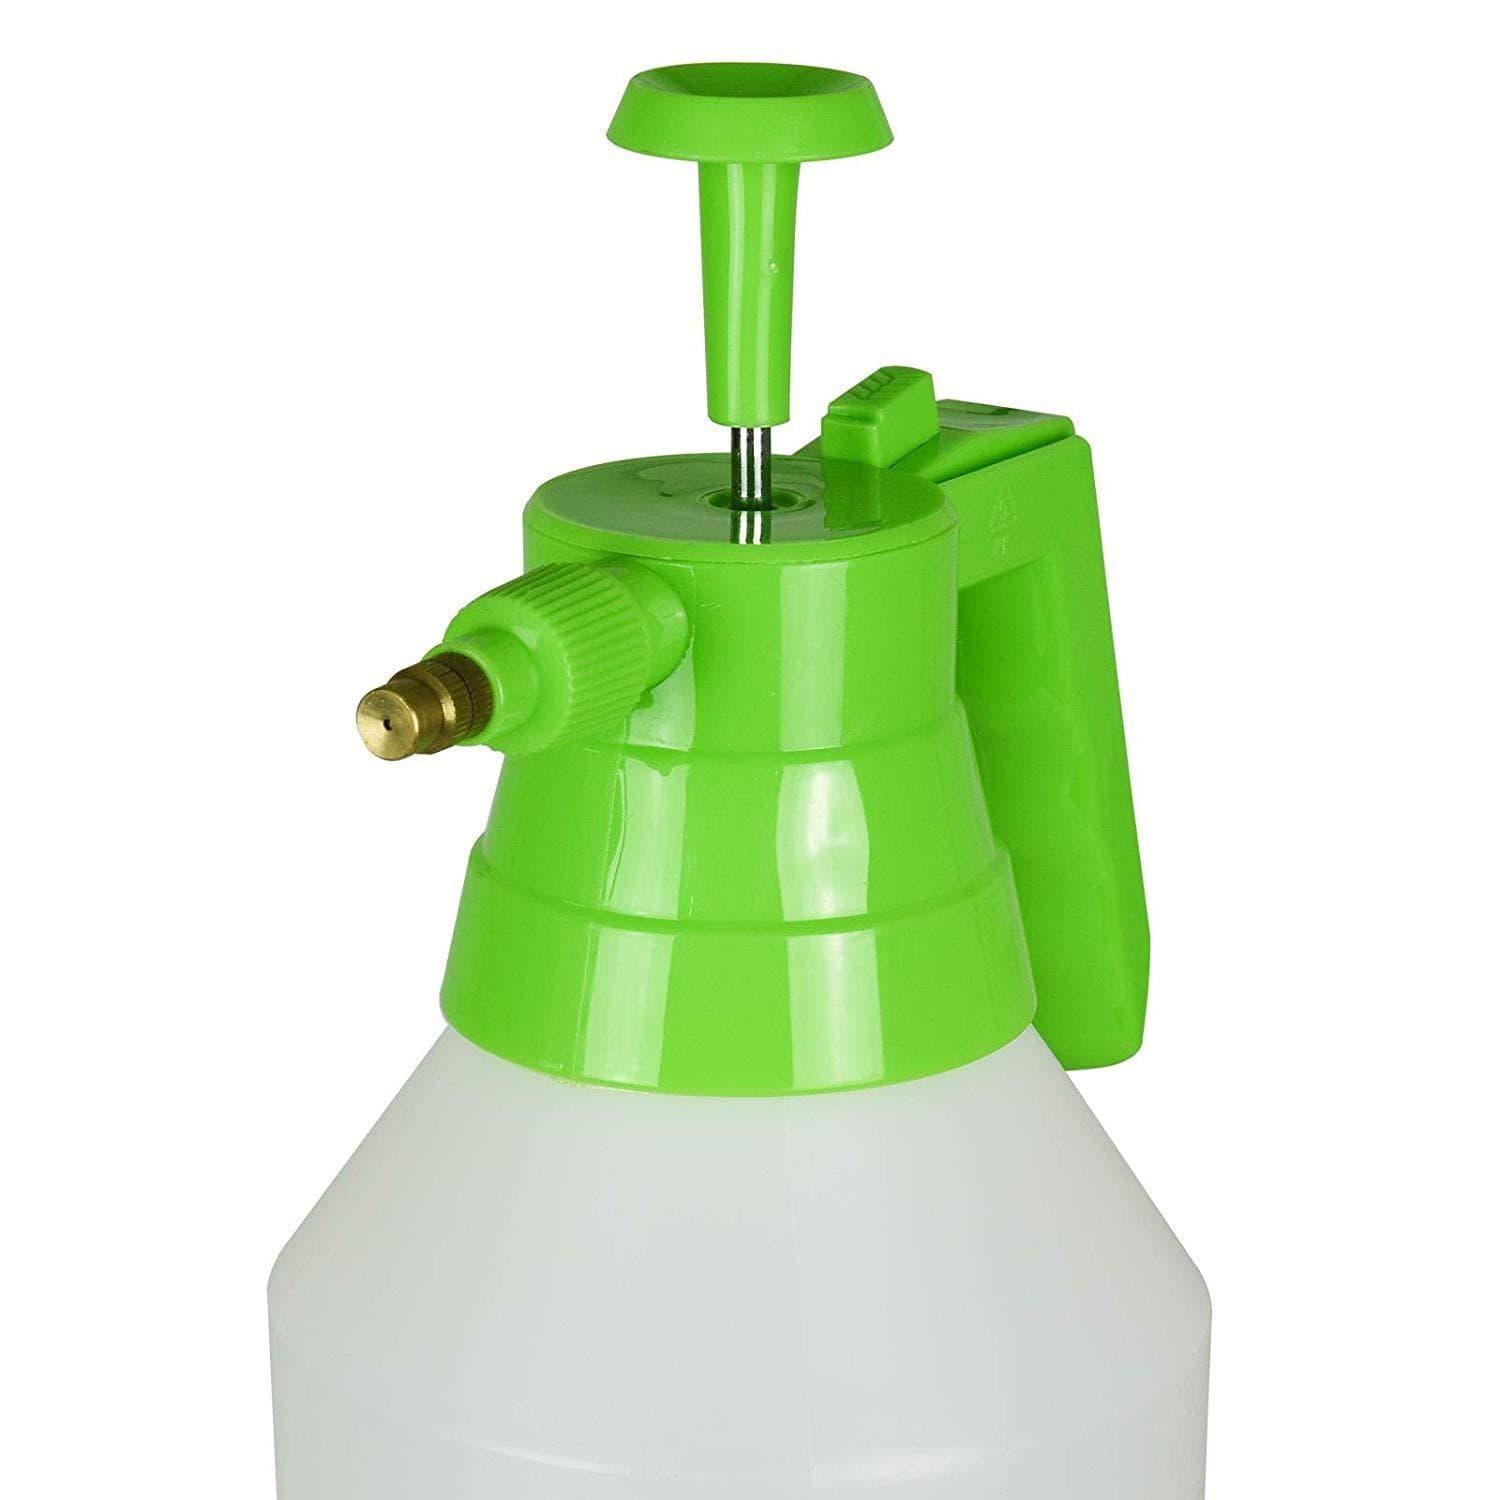 Pest & Diseases 1.5L Pressure Sprayer